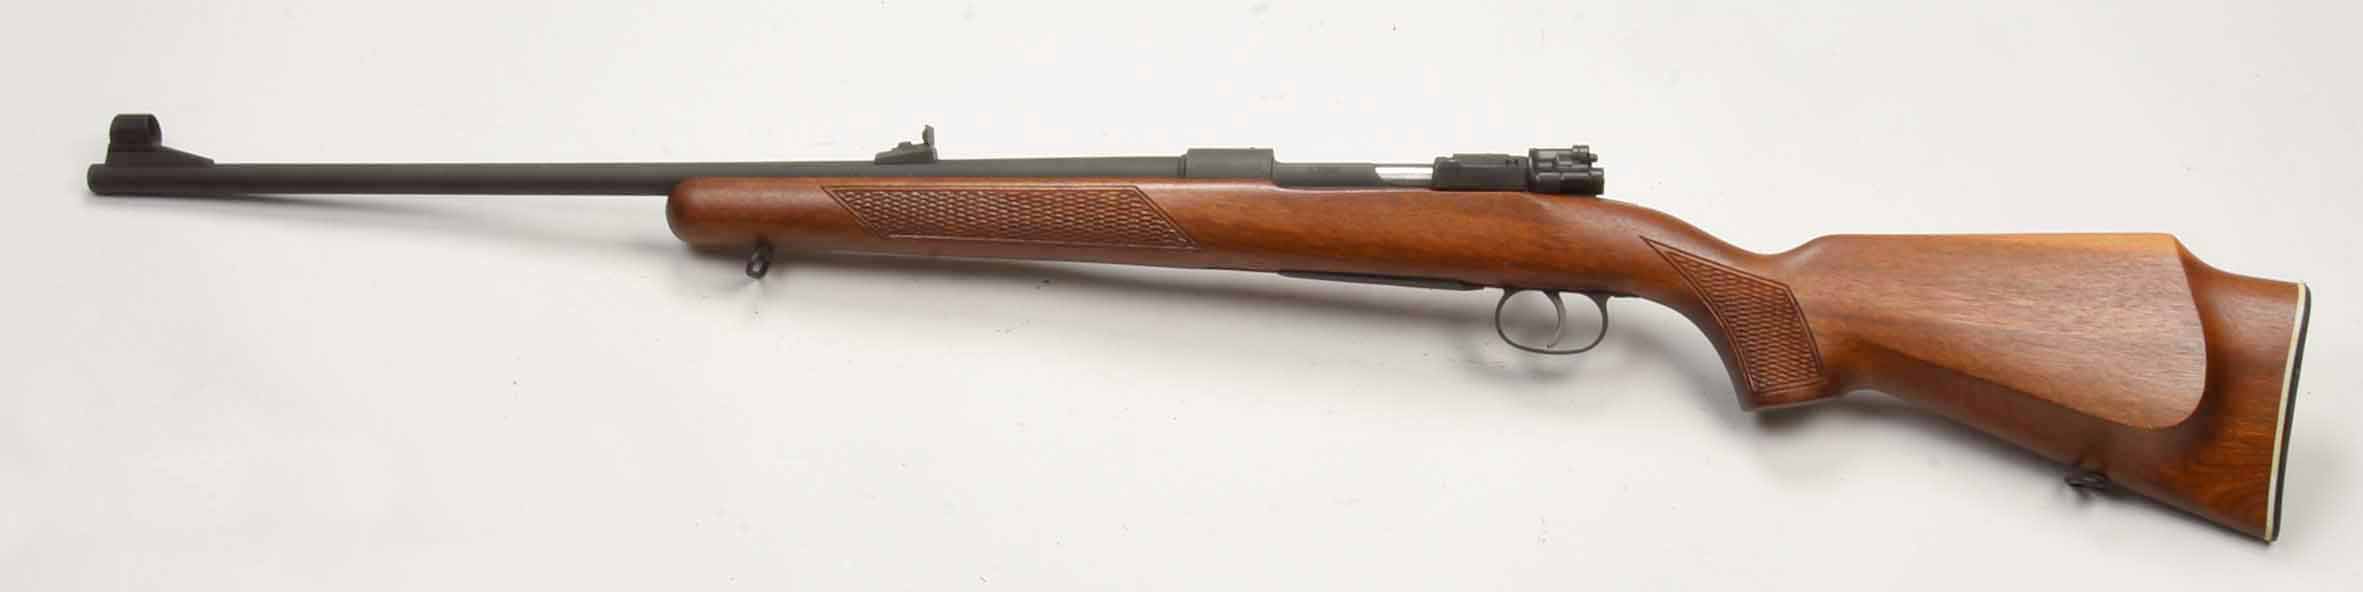 ./guns/rifle/bilder/Rifle-Kongsberg-M83-3003-2.jpg